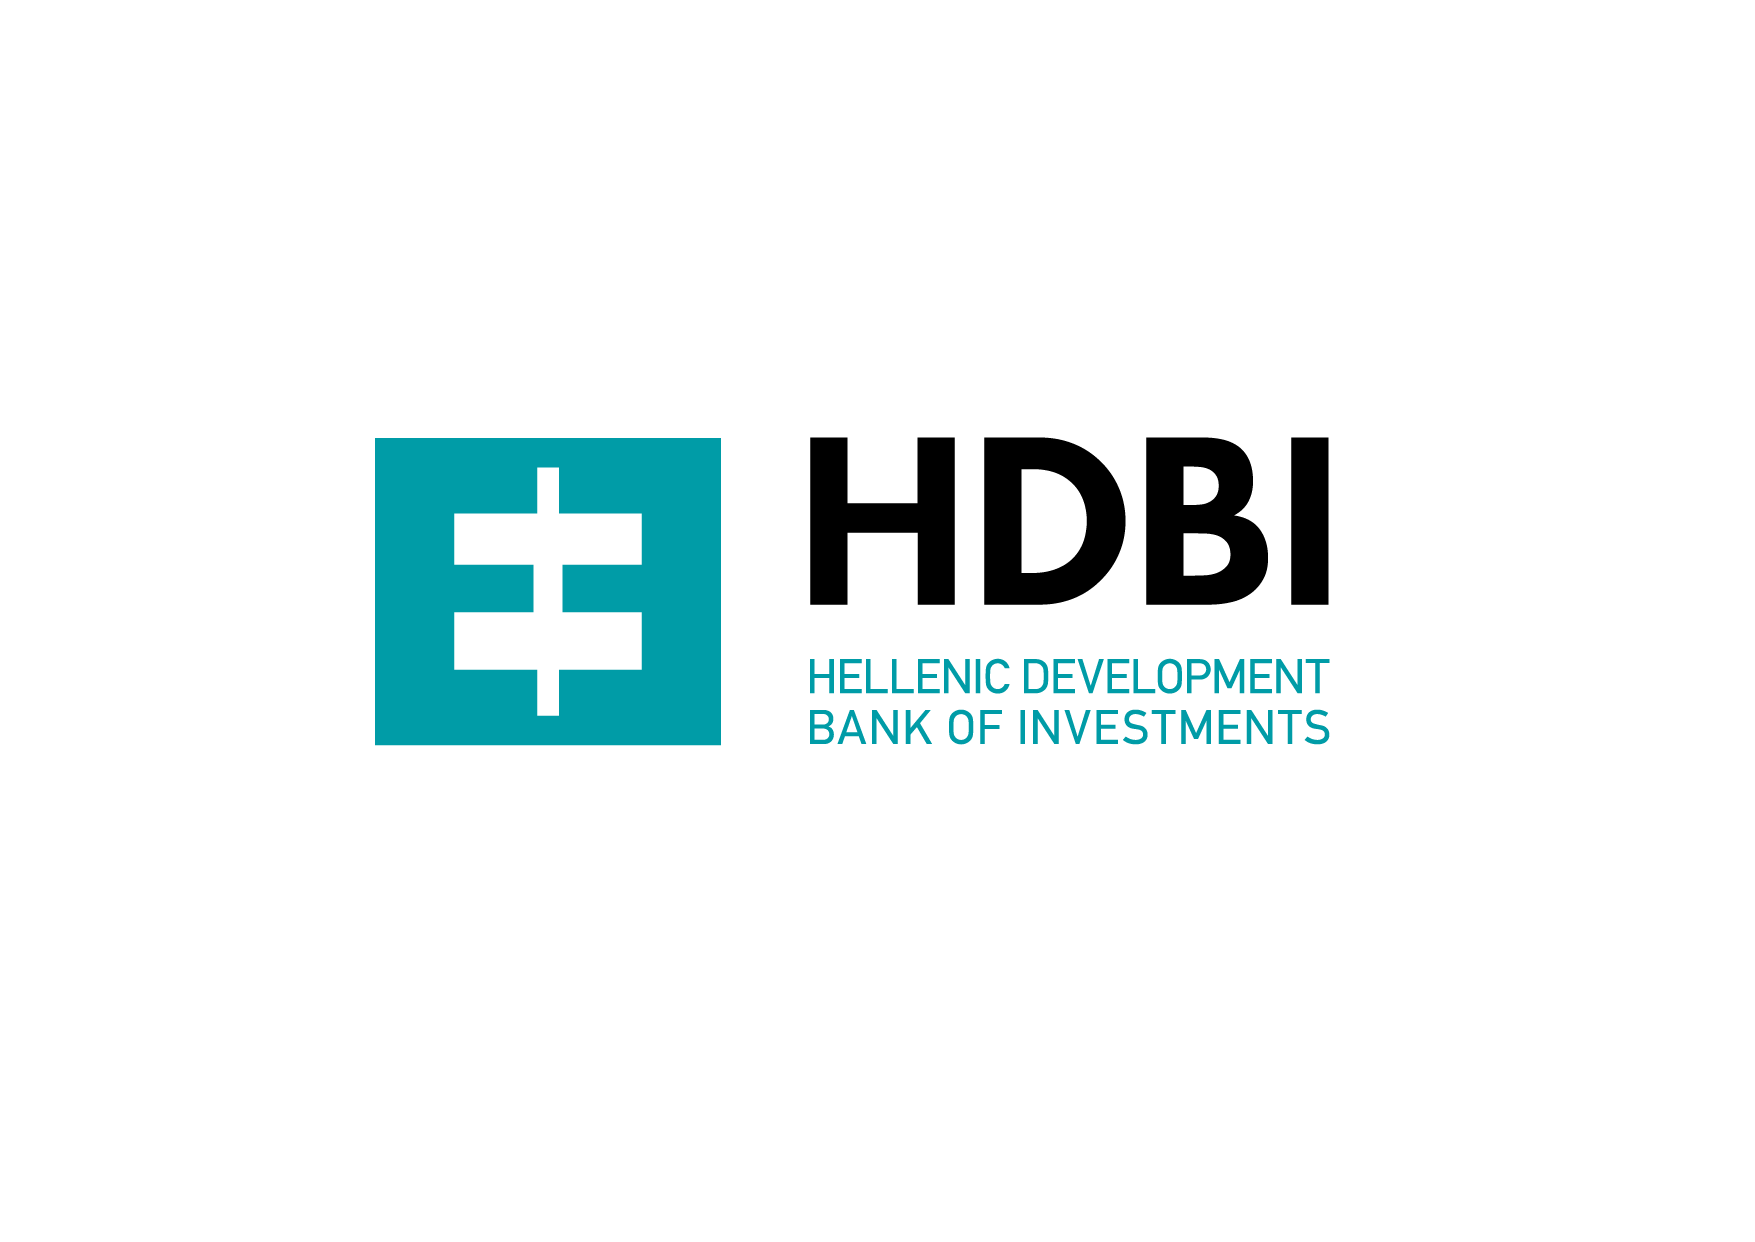 HDBI's logo